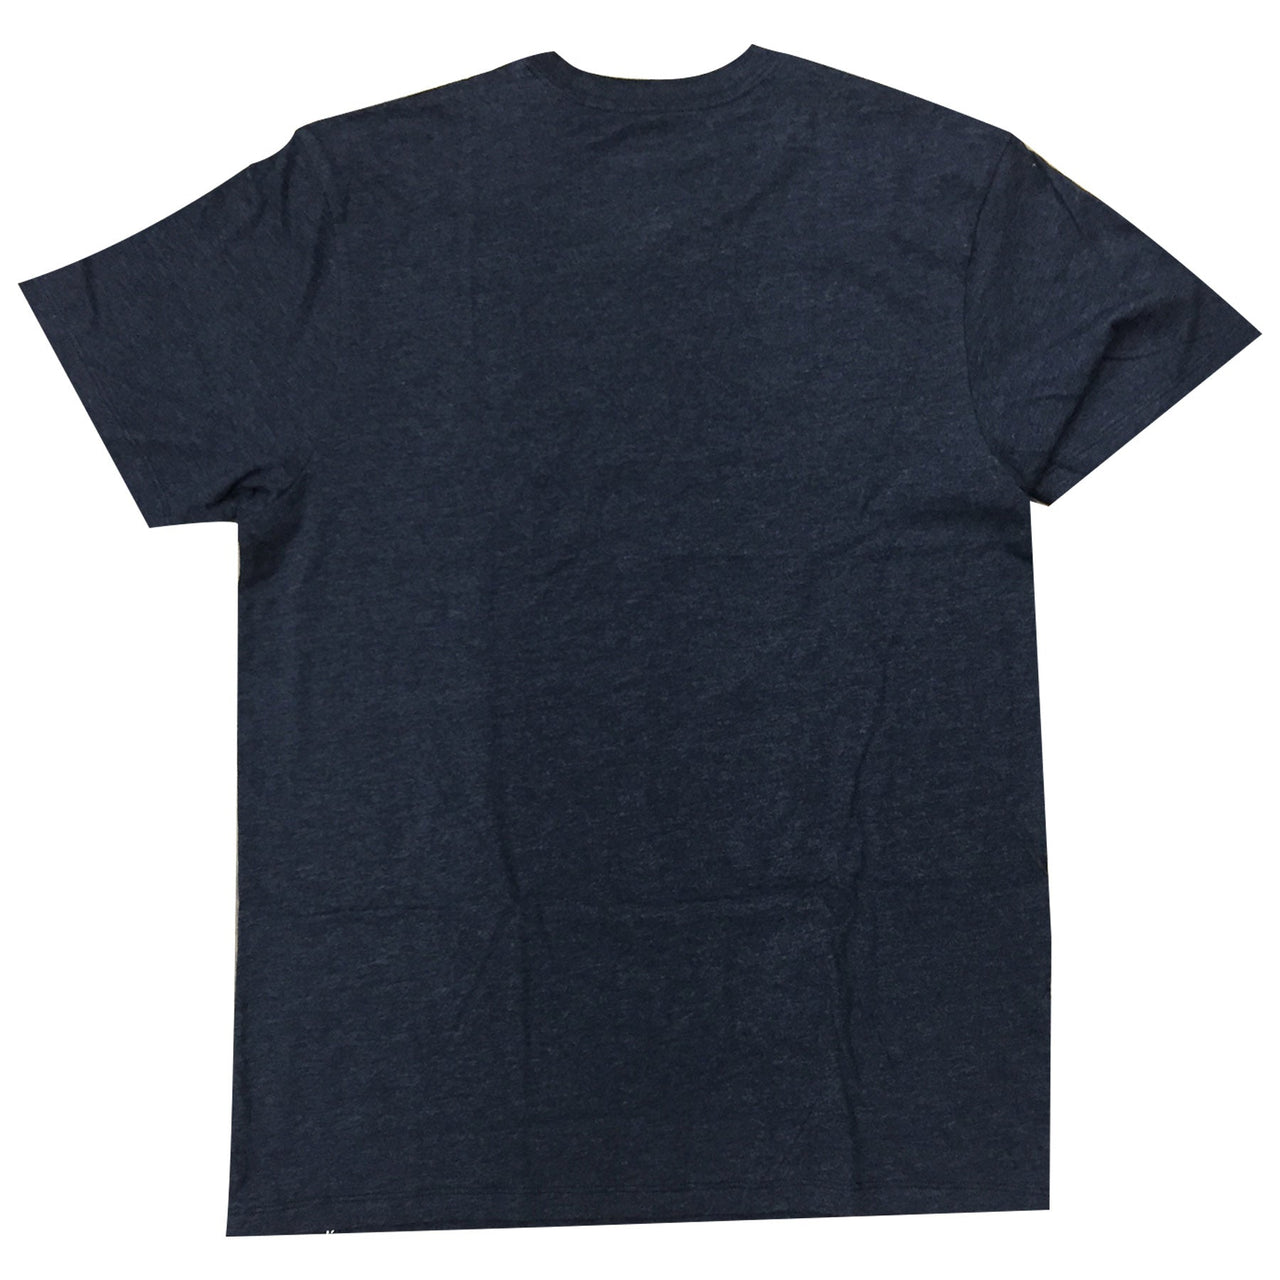 the navy blue villanova t-shirt is heather navy blue